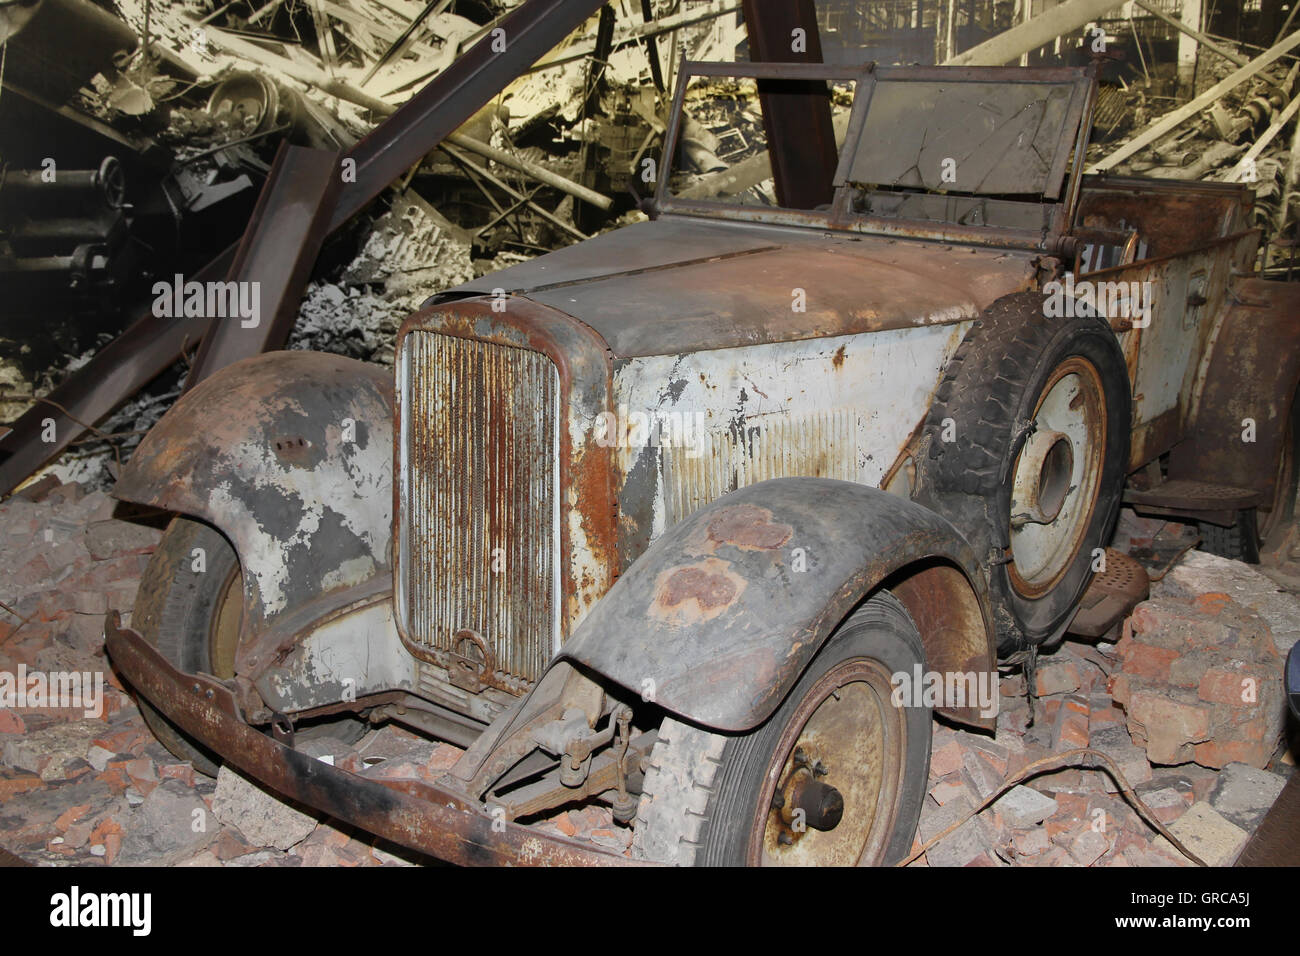 Vehículo militar dañado Foto de stock